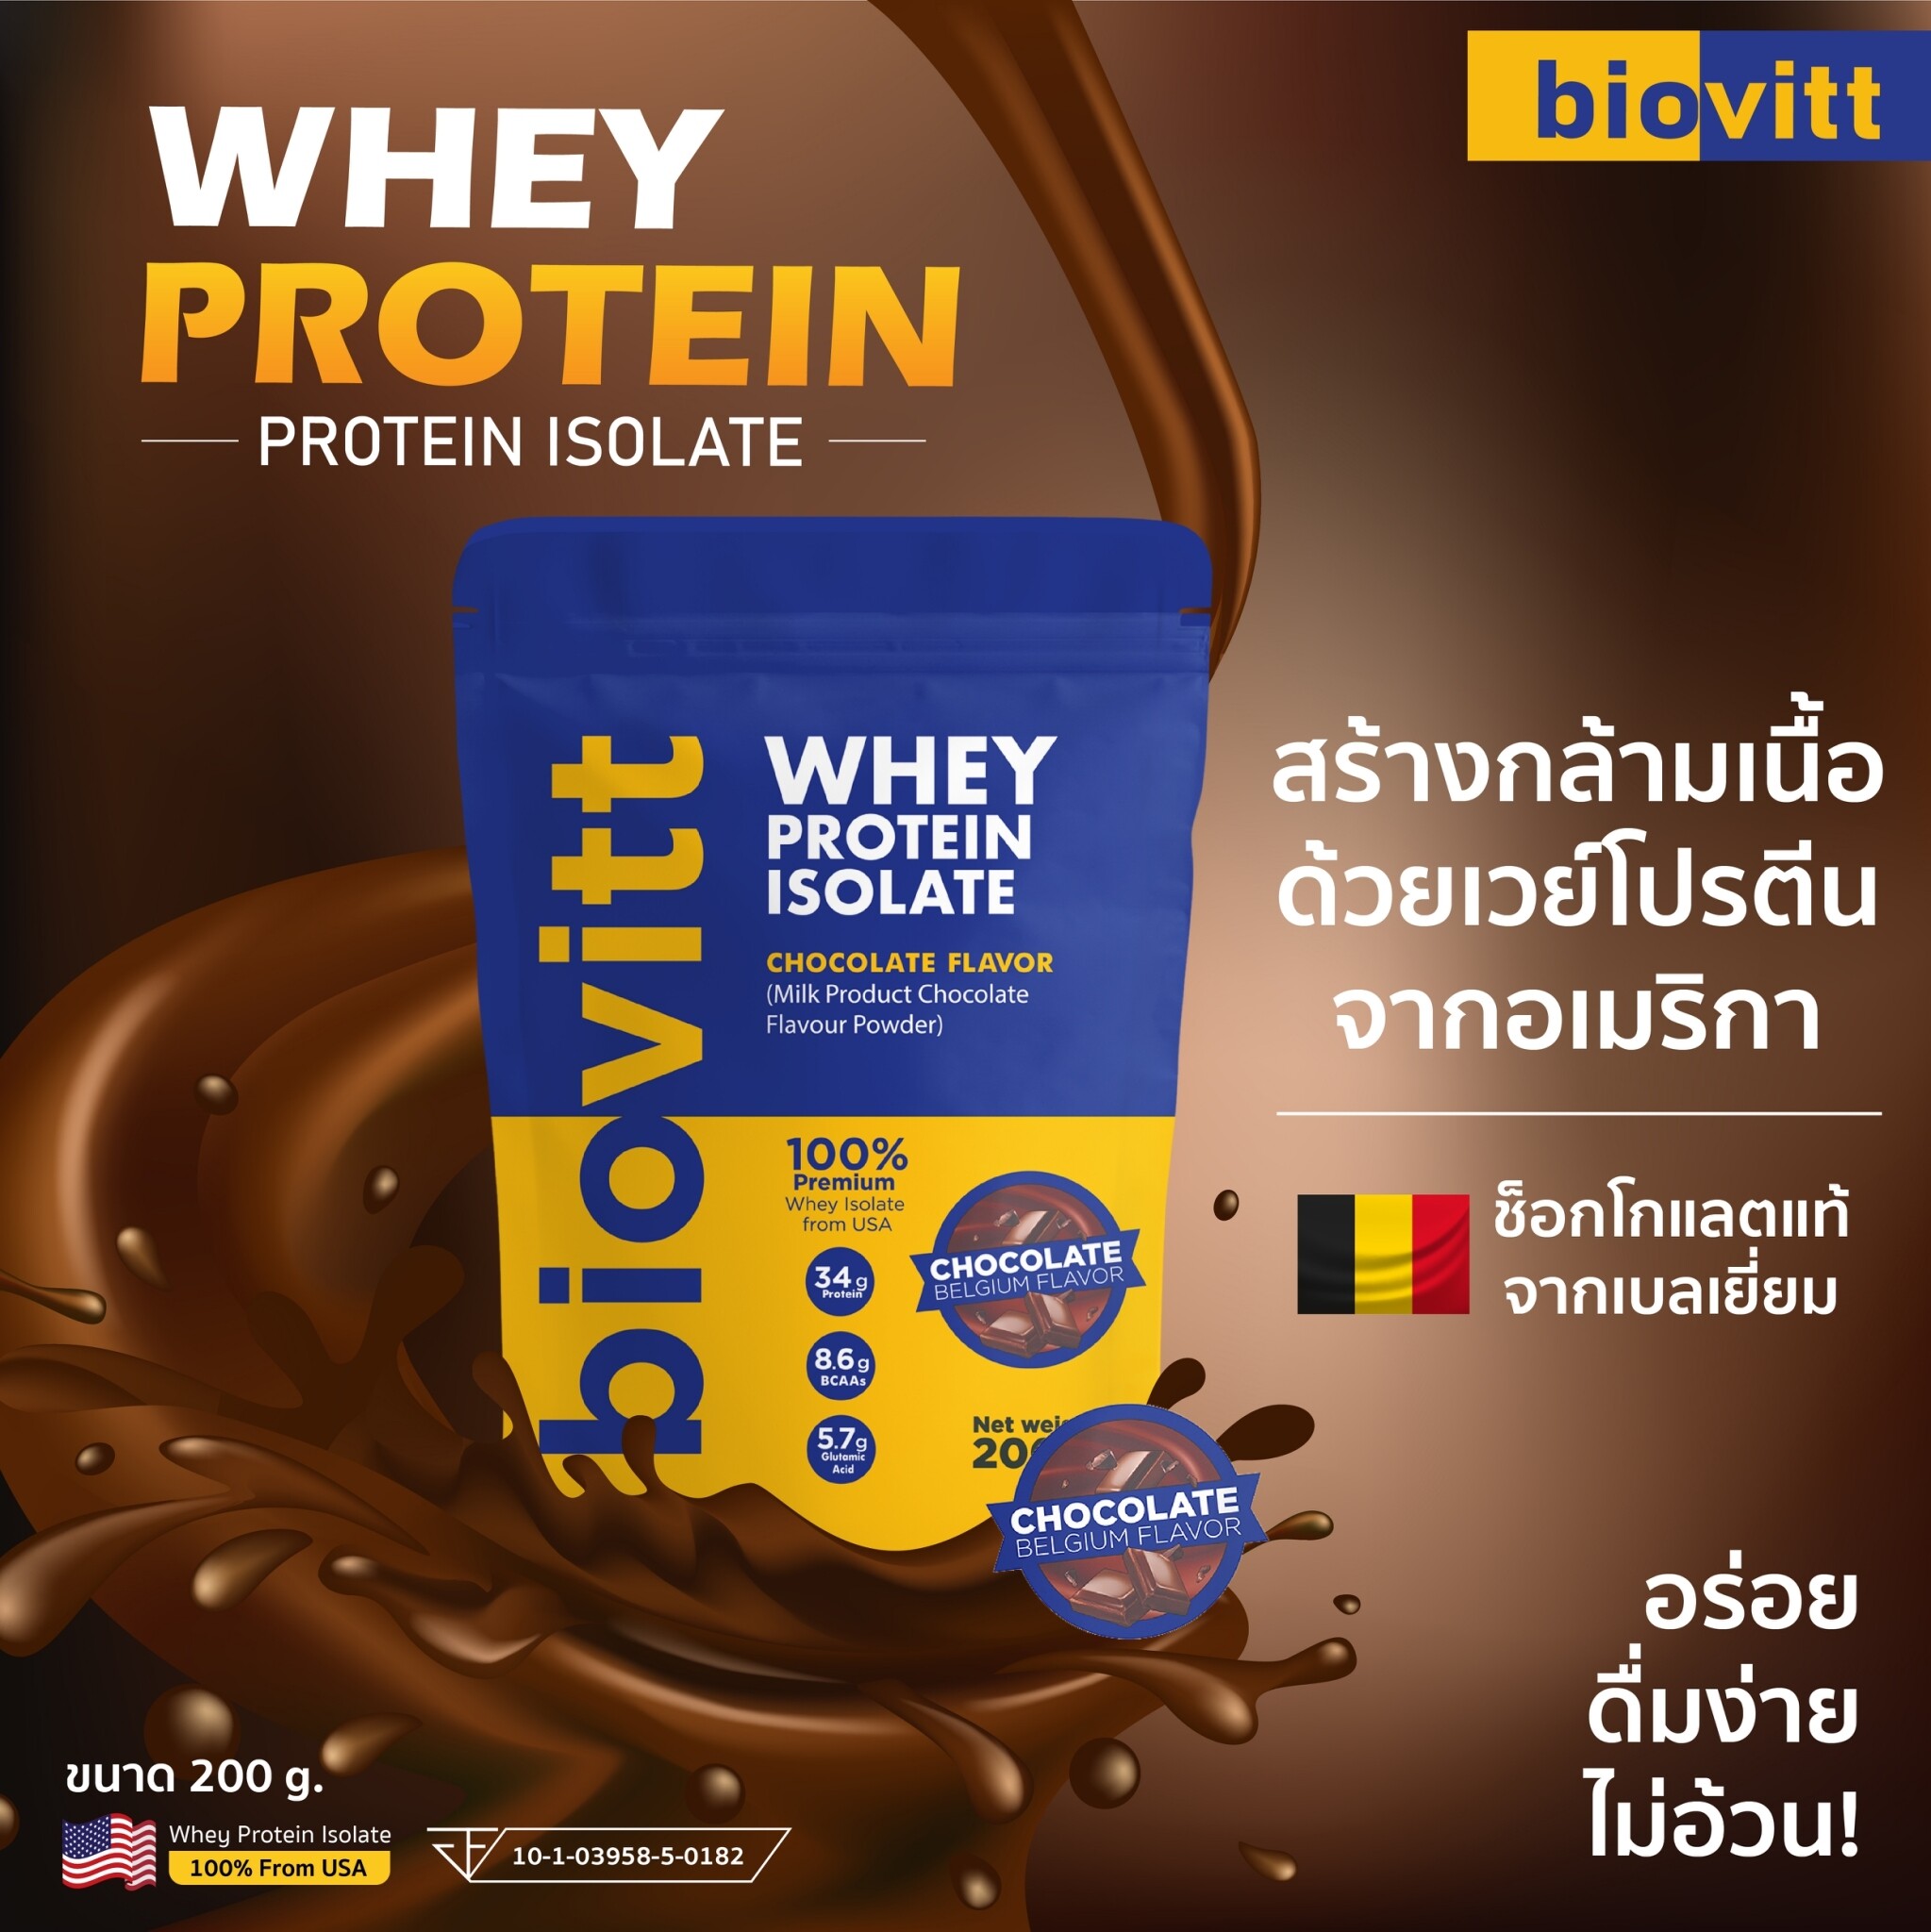 Biovitt Whey Protein Isolate เวย์โปรตีน ไอโซเลท รสช็อกโกแลต ลีนไขมัน ปั๊มซิกแพค เร่งกล้าม เน้นอร่อย ไม่มีน้ำตาล 200 กรัม (แพ็ค 1 ซอง)